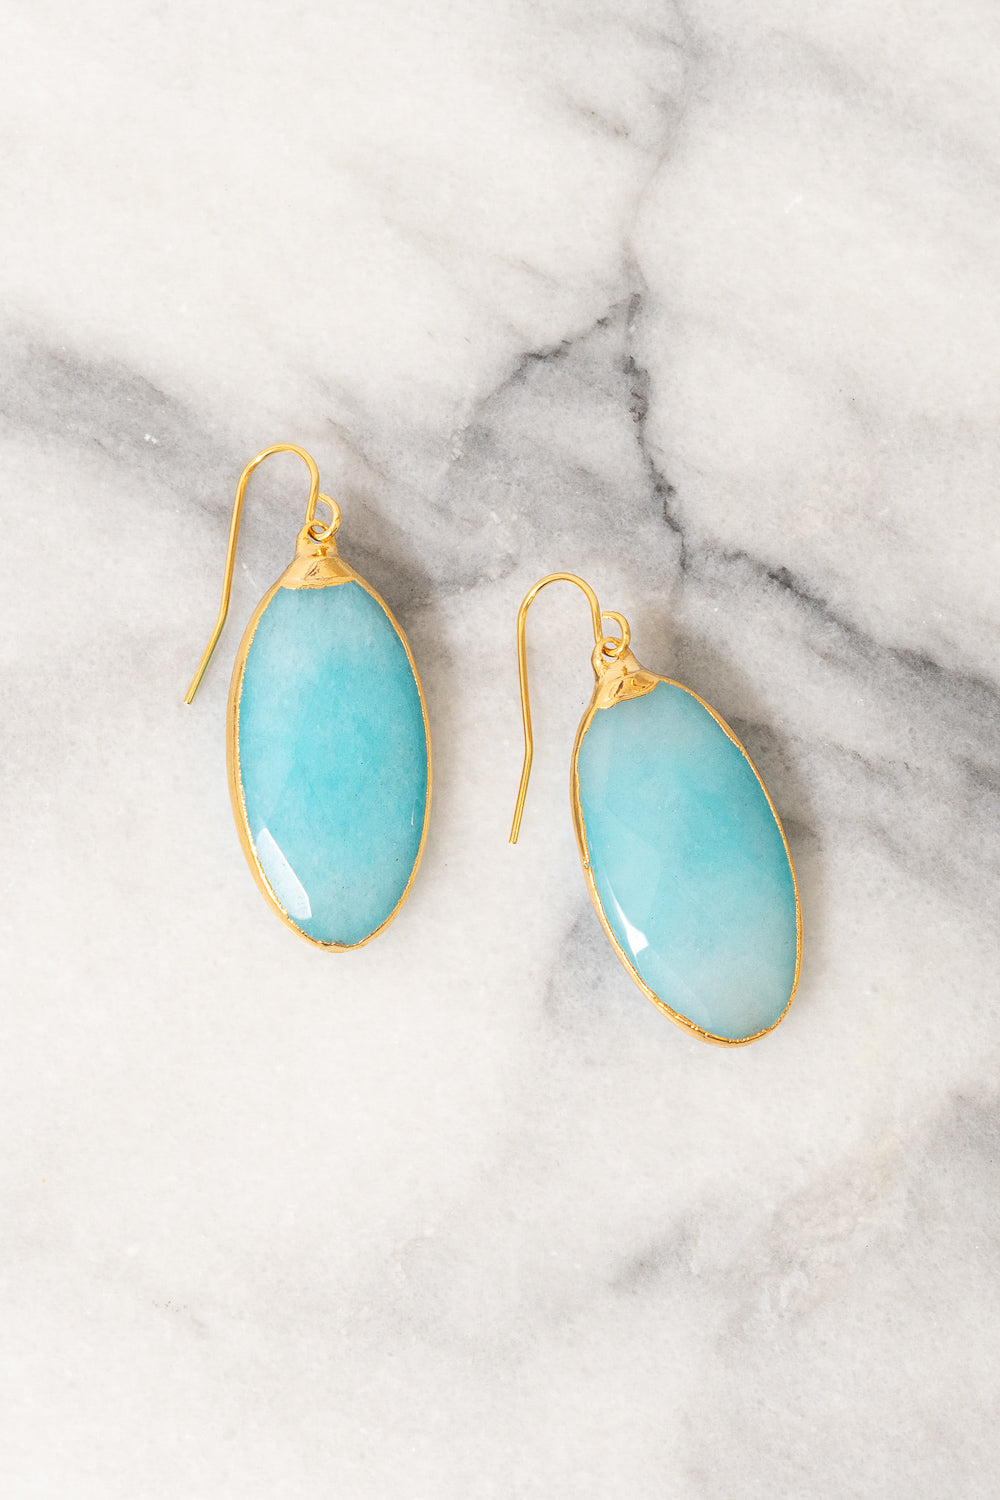 turquoise jade dangle earrings on marble